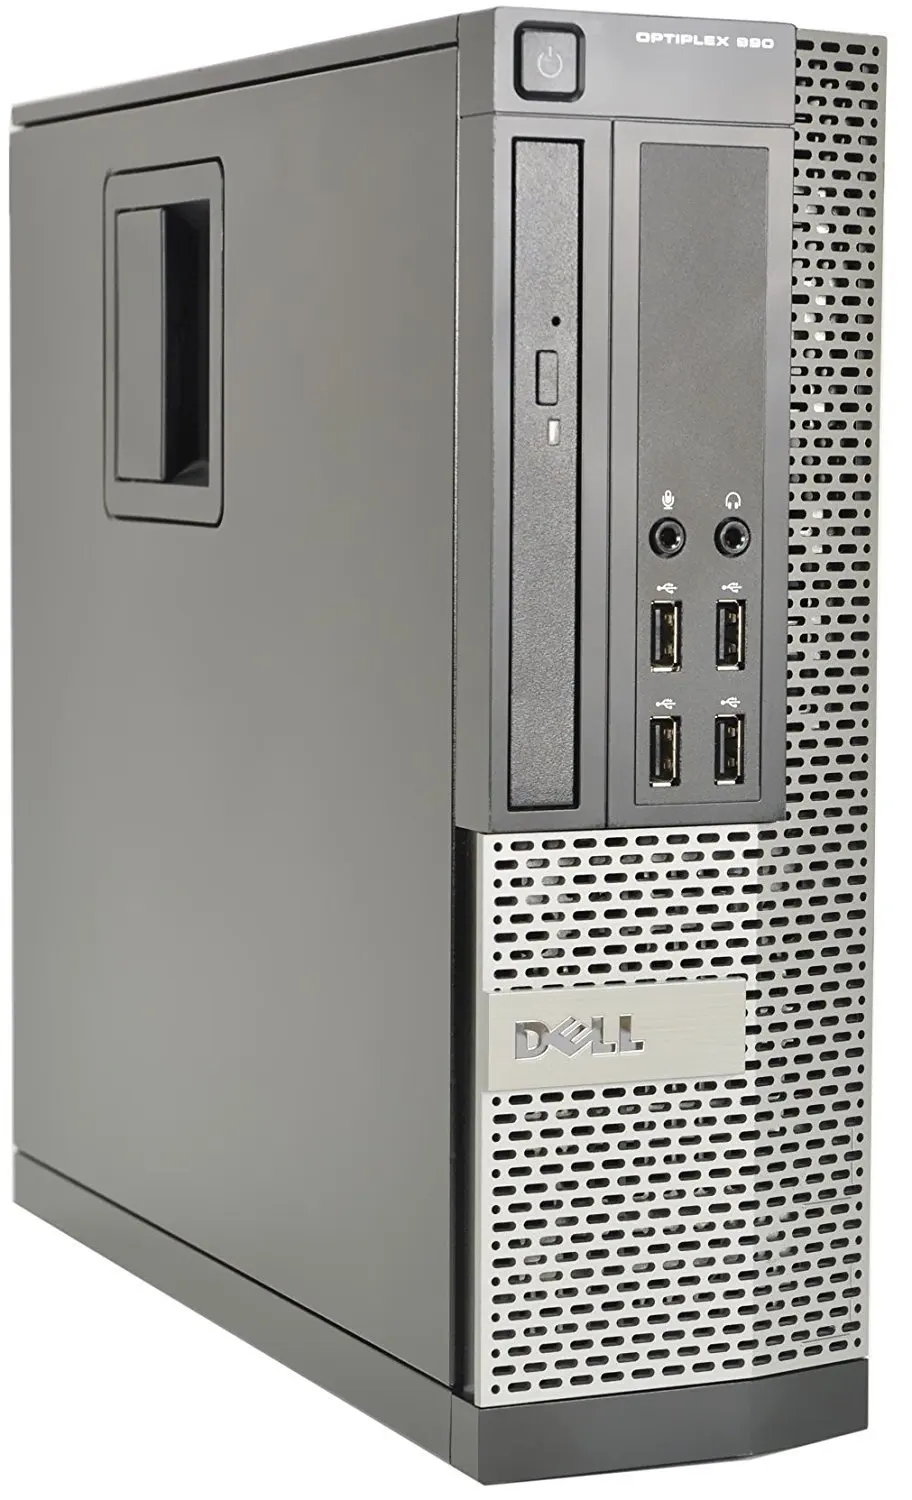 Buy Dell Optiplex 990 SFF, Core i5-2400, 3.1GHz (2nd Gen), 8GB, 1TB